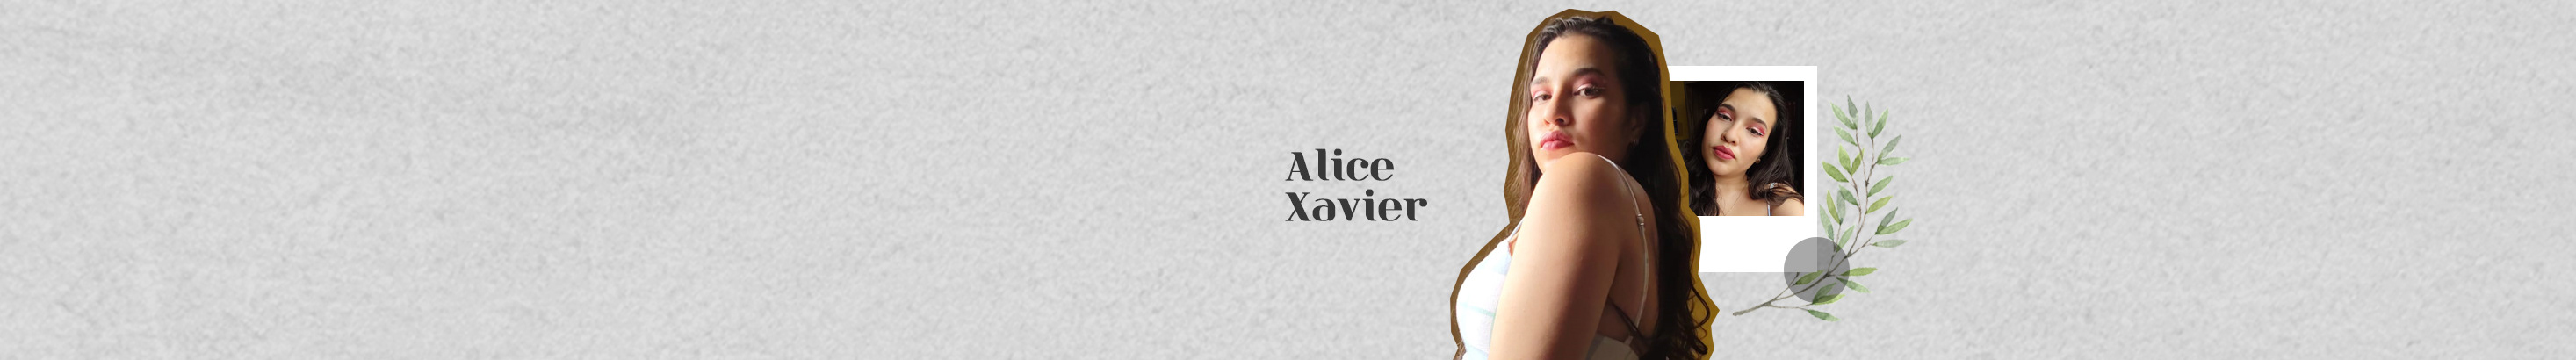 Alice Xavier profil başlığı